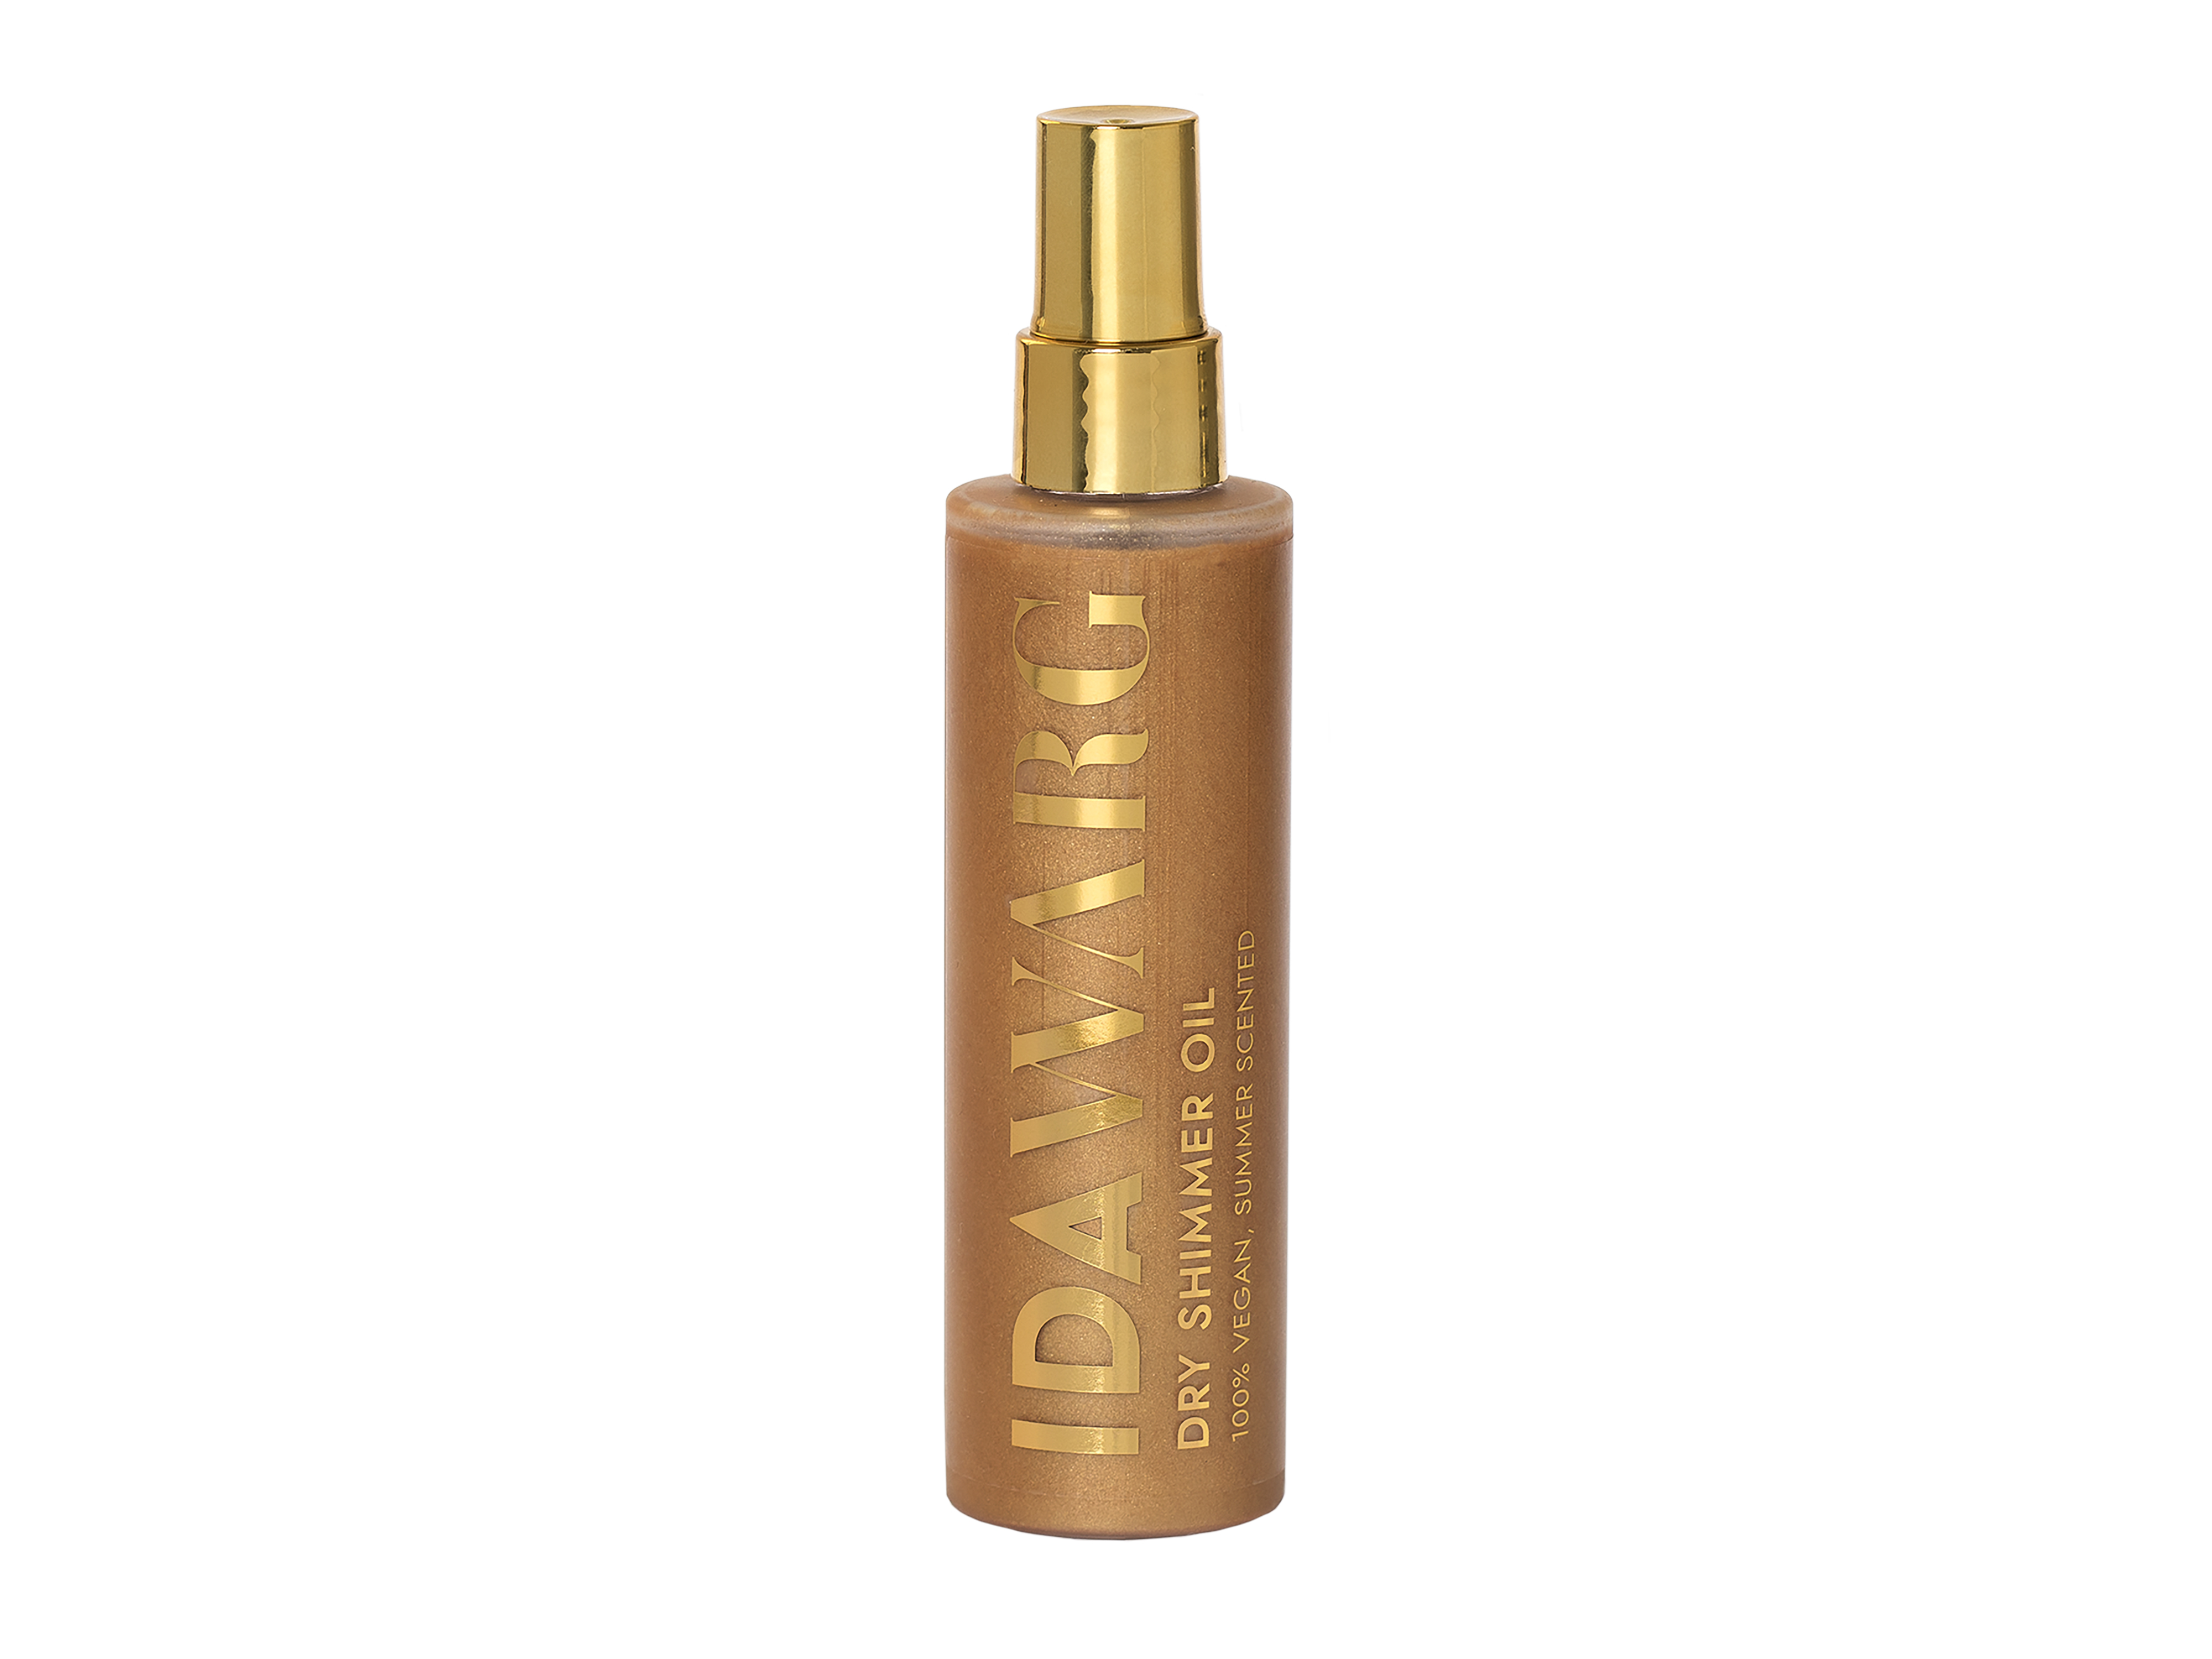 Ida Warg Beauty Dry Shimmer Oil, 100 ml